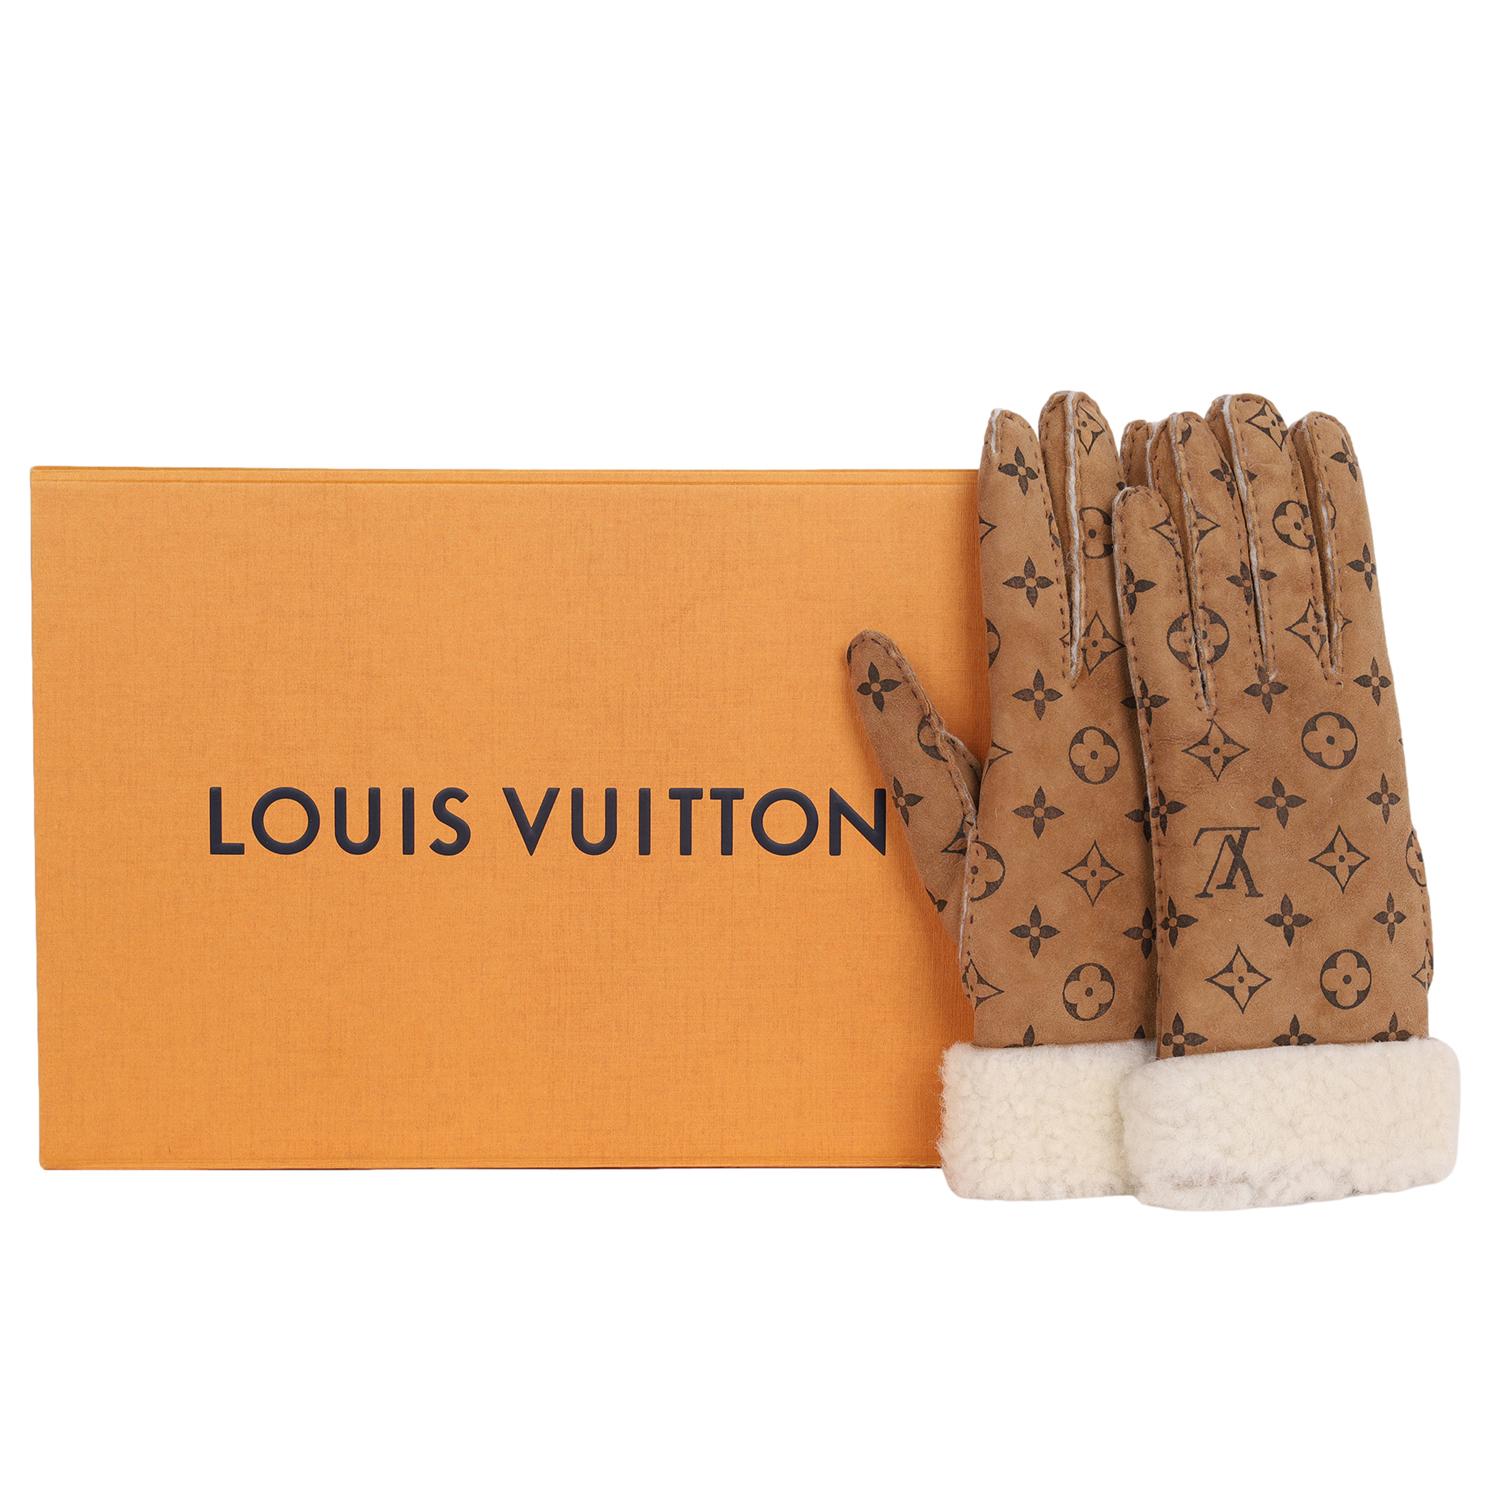 Authentic, pre-loved Louis Vuitton Gant monogram shearling mouton gloves. Size 7.5

Excellent condition!

9.5